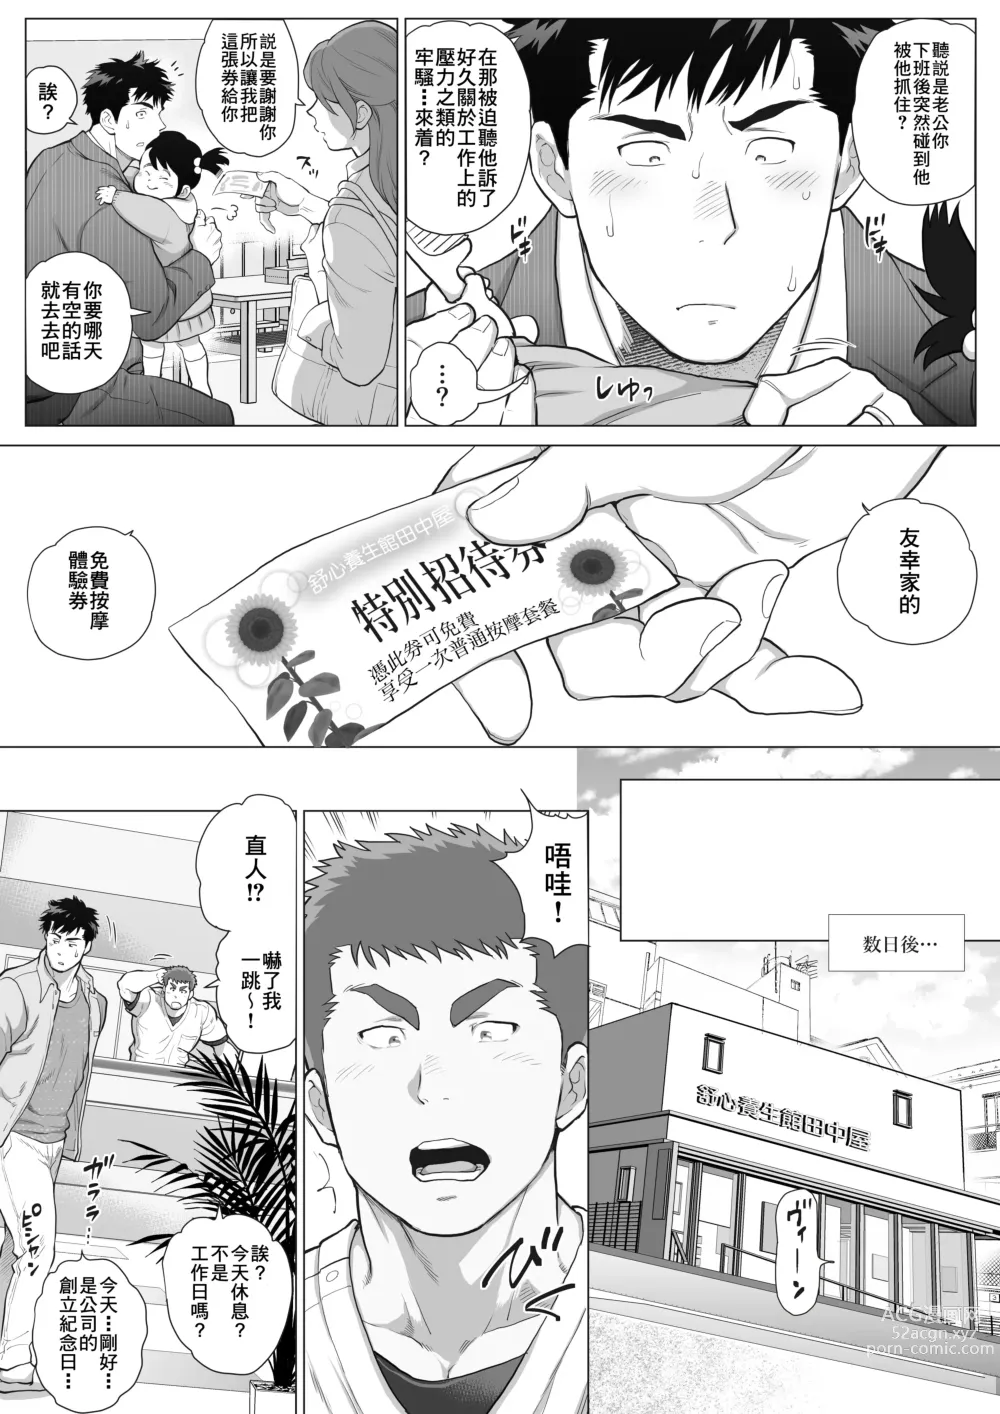 Page 2 of manga 直人爸爸与友幸爸爸 第四话